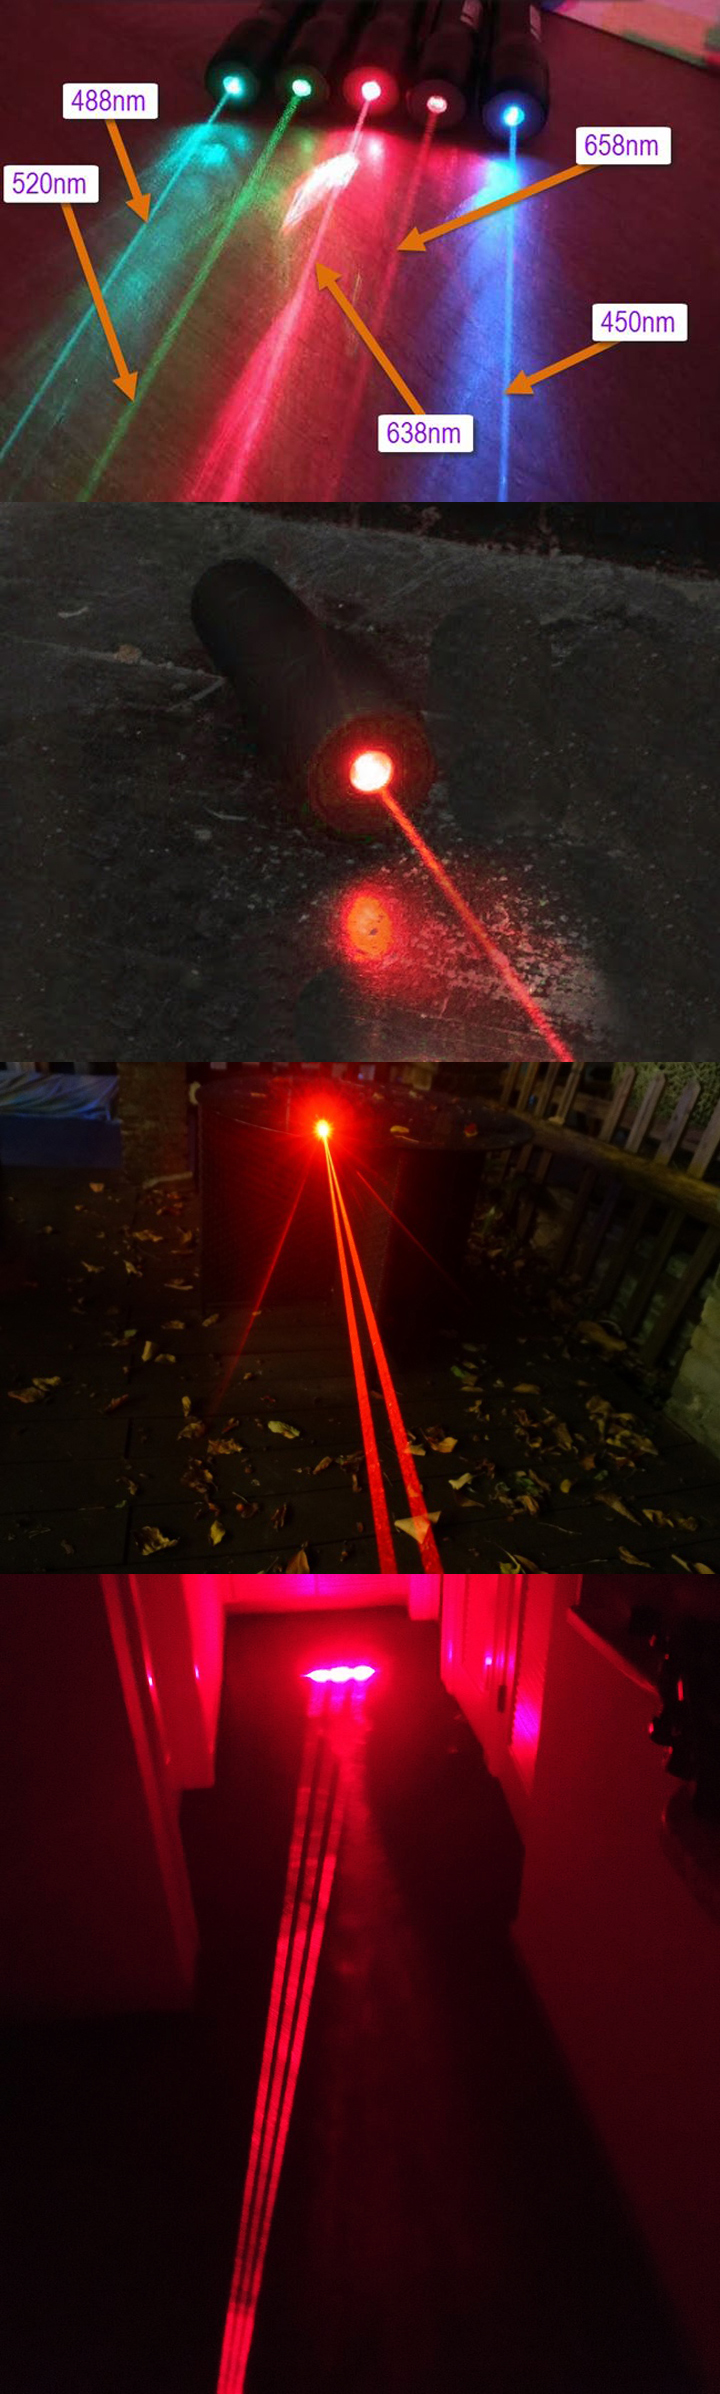 Laser Rouge 3000mW 